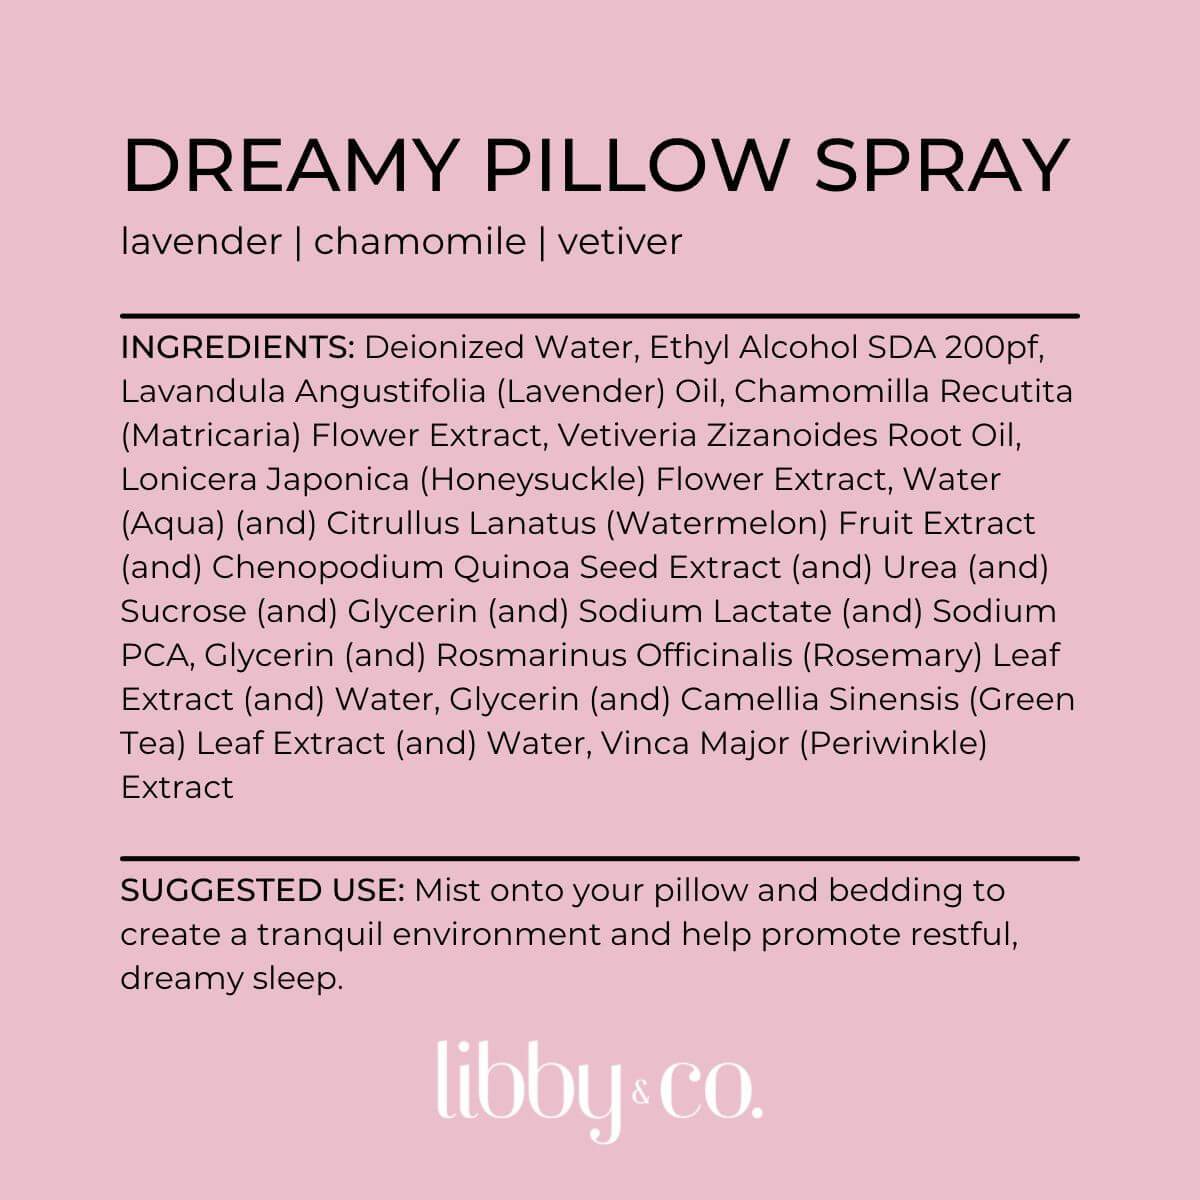 Dreamy Pillow Spray